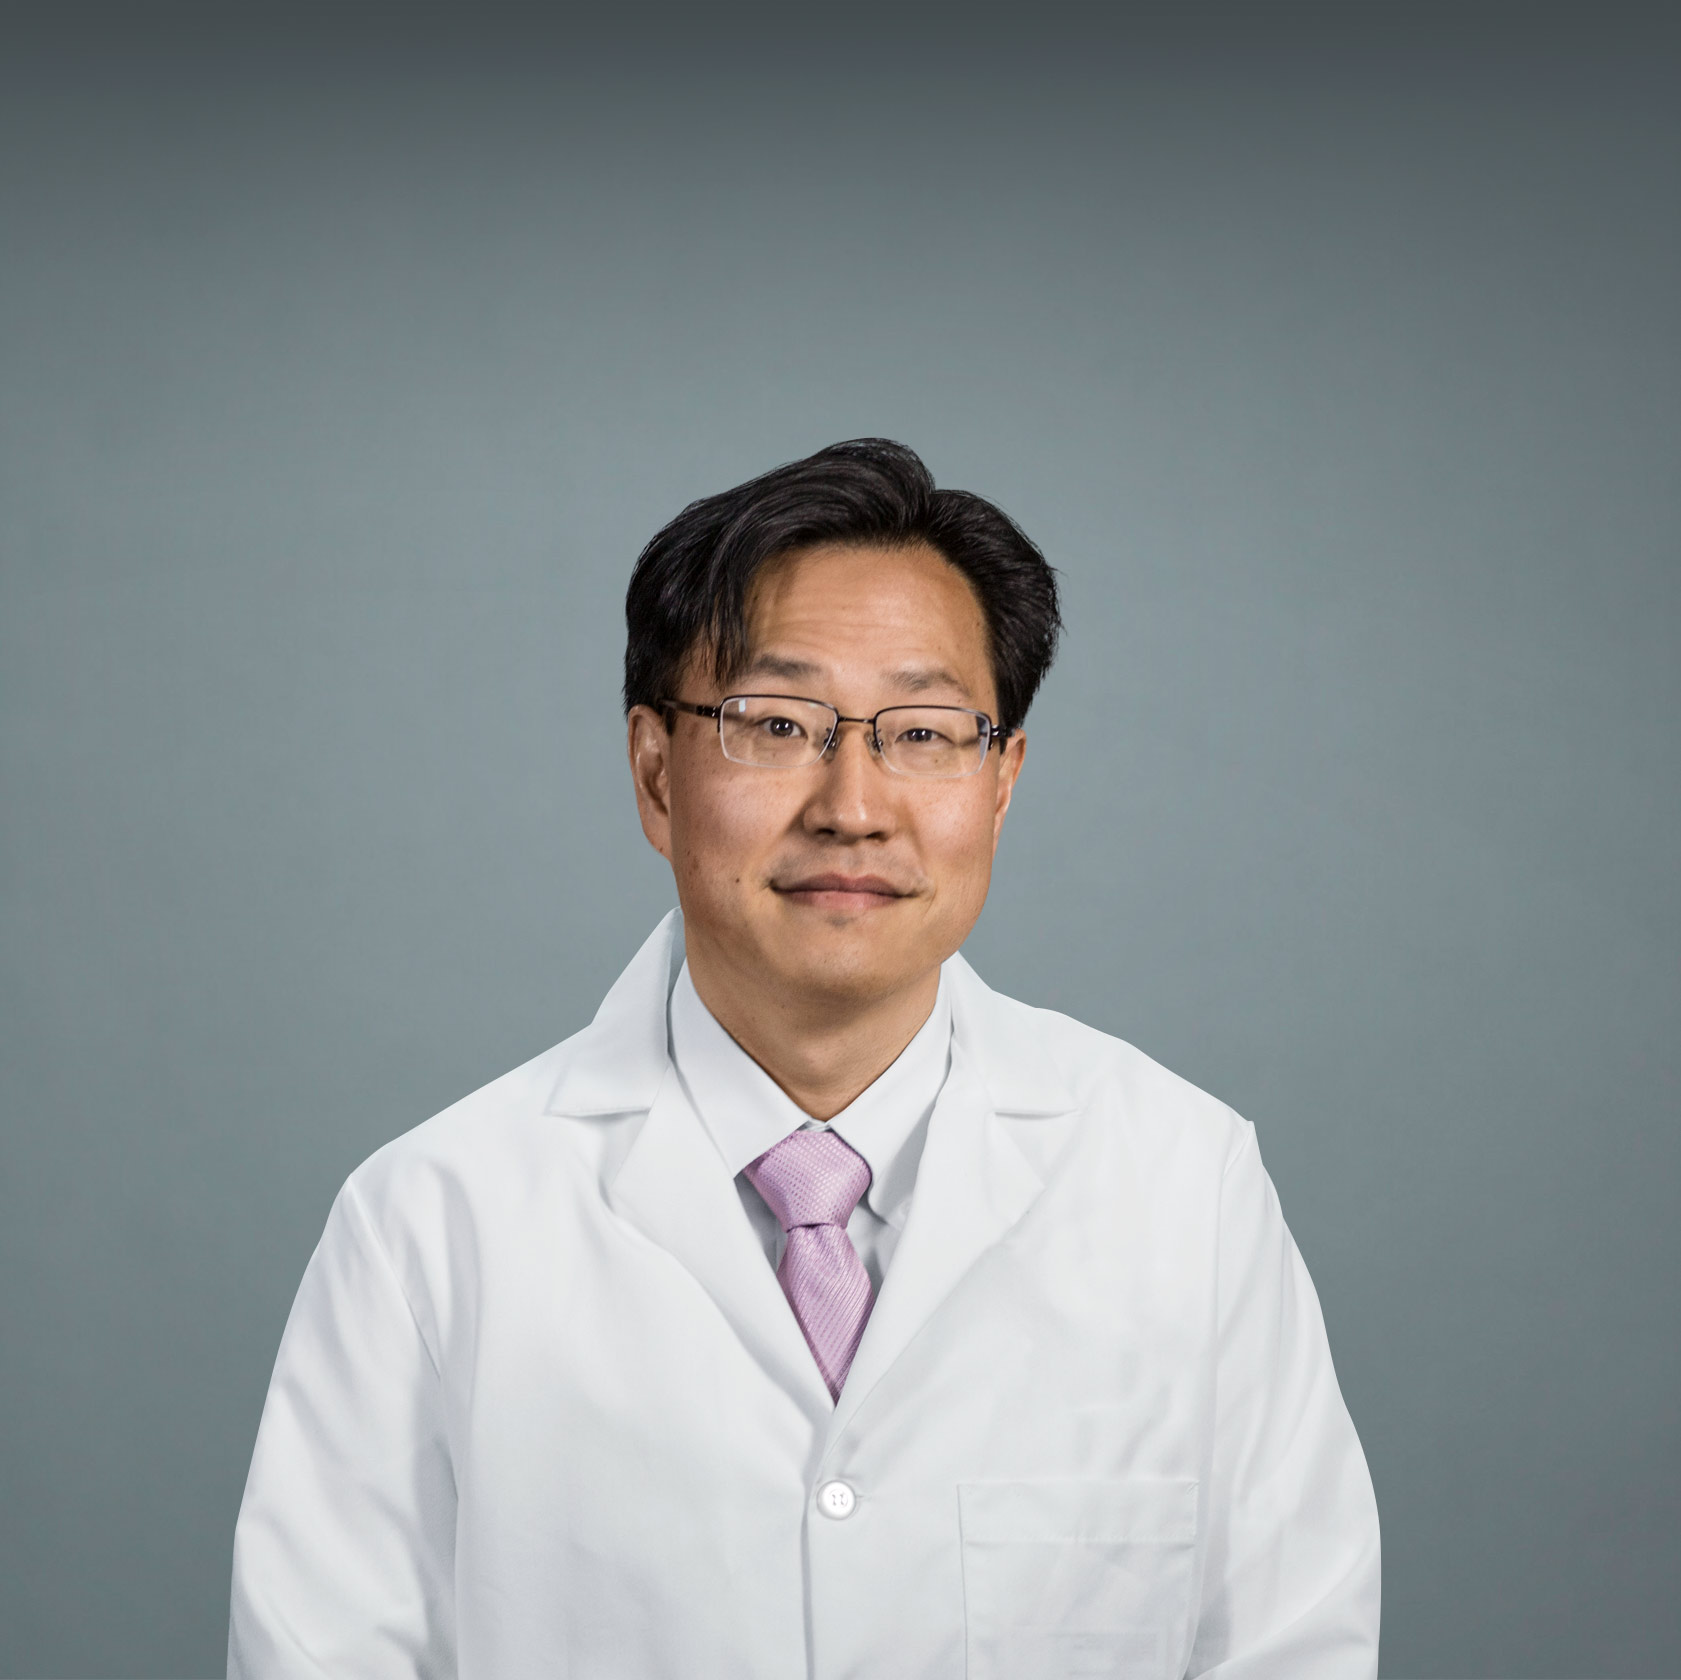 Dr. Daniel Cho